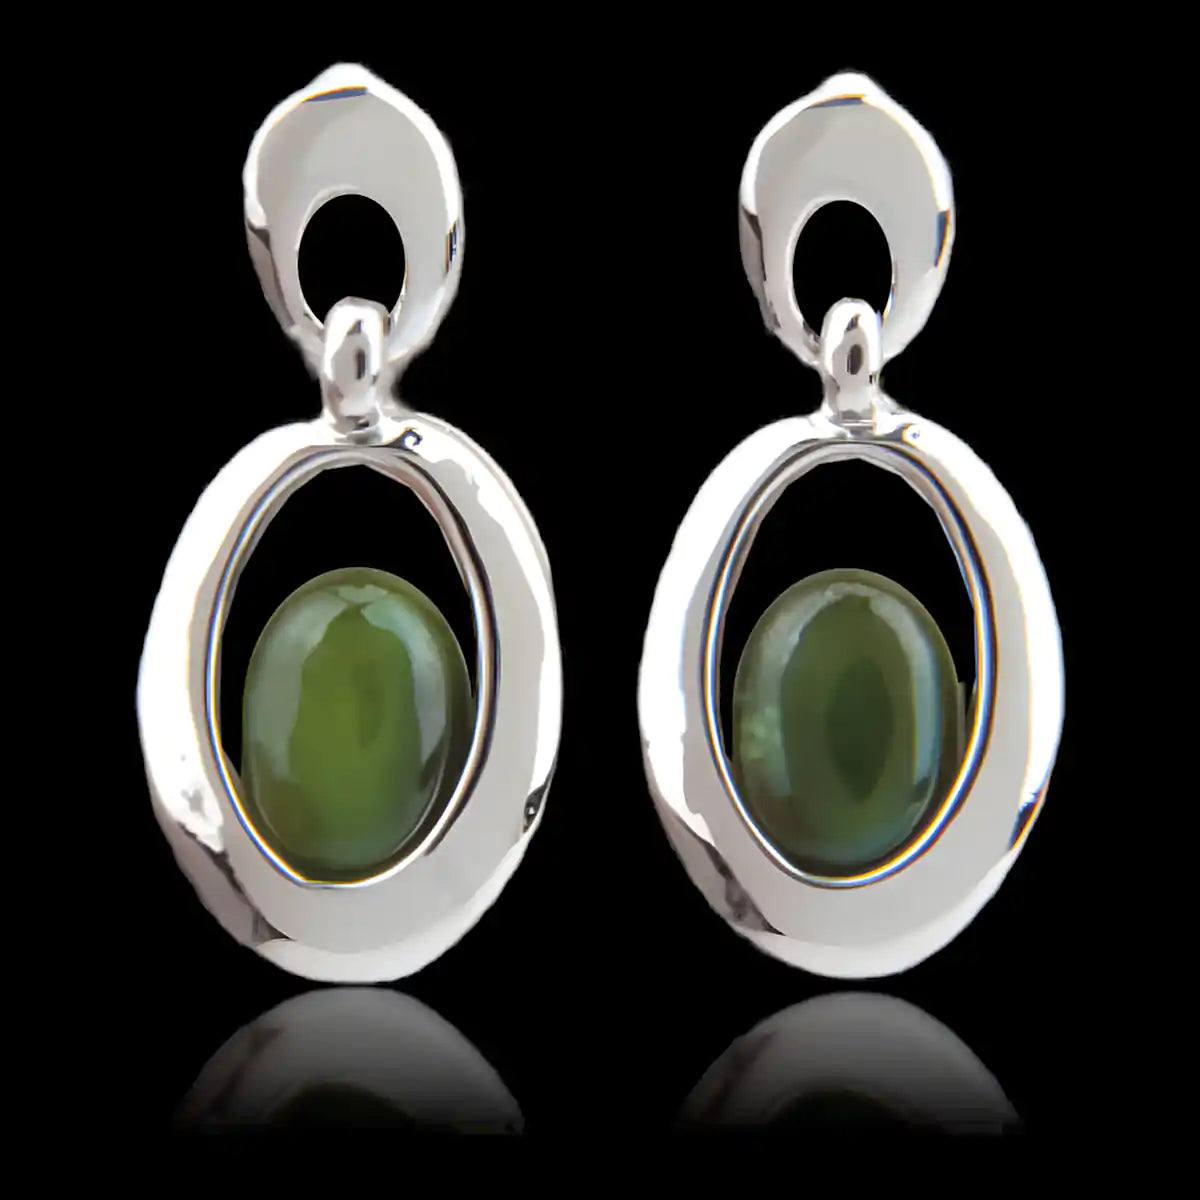 Jade clarity earrings